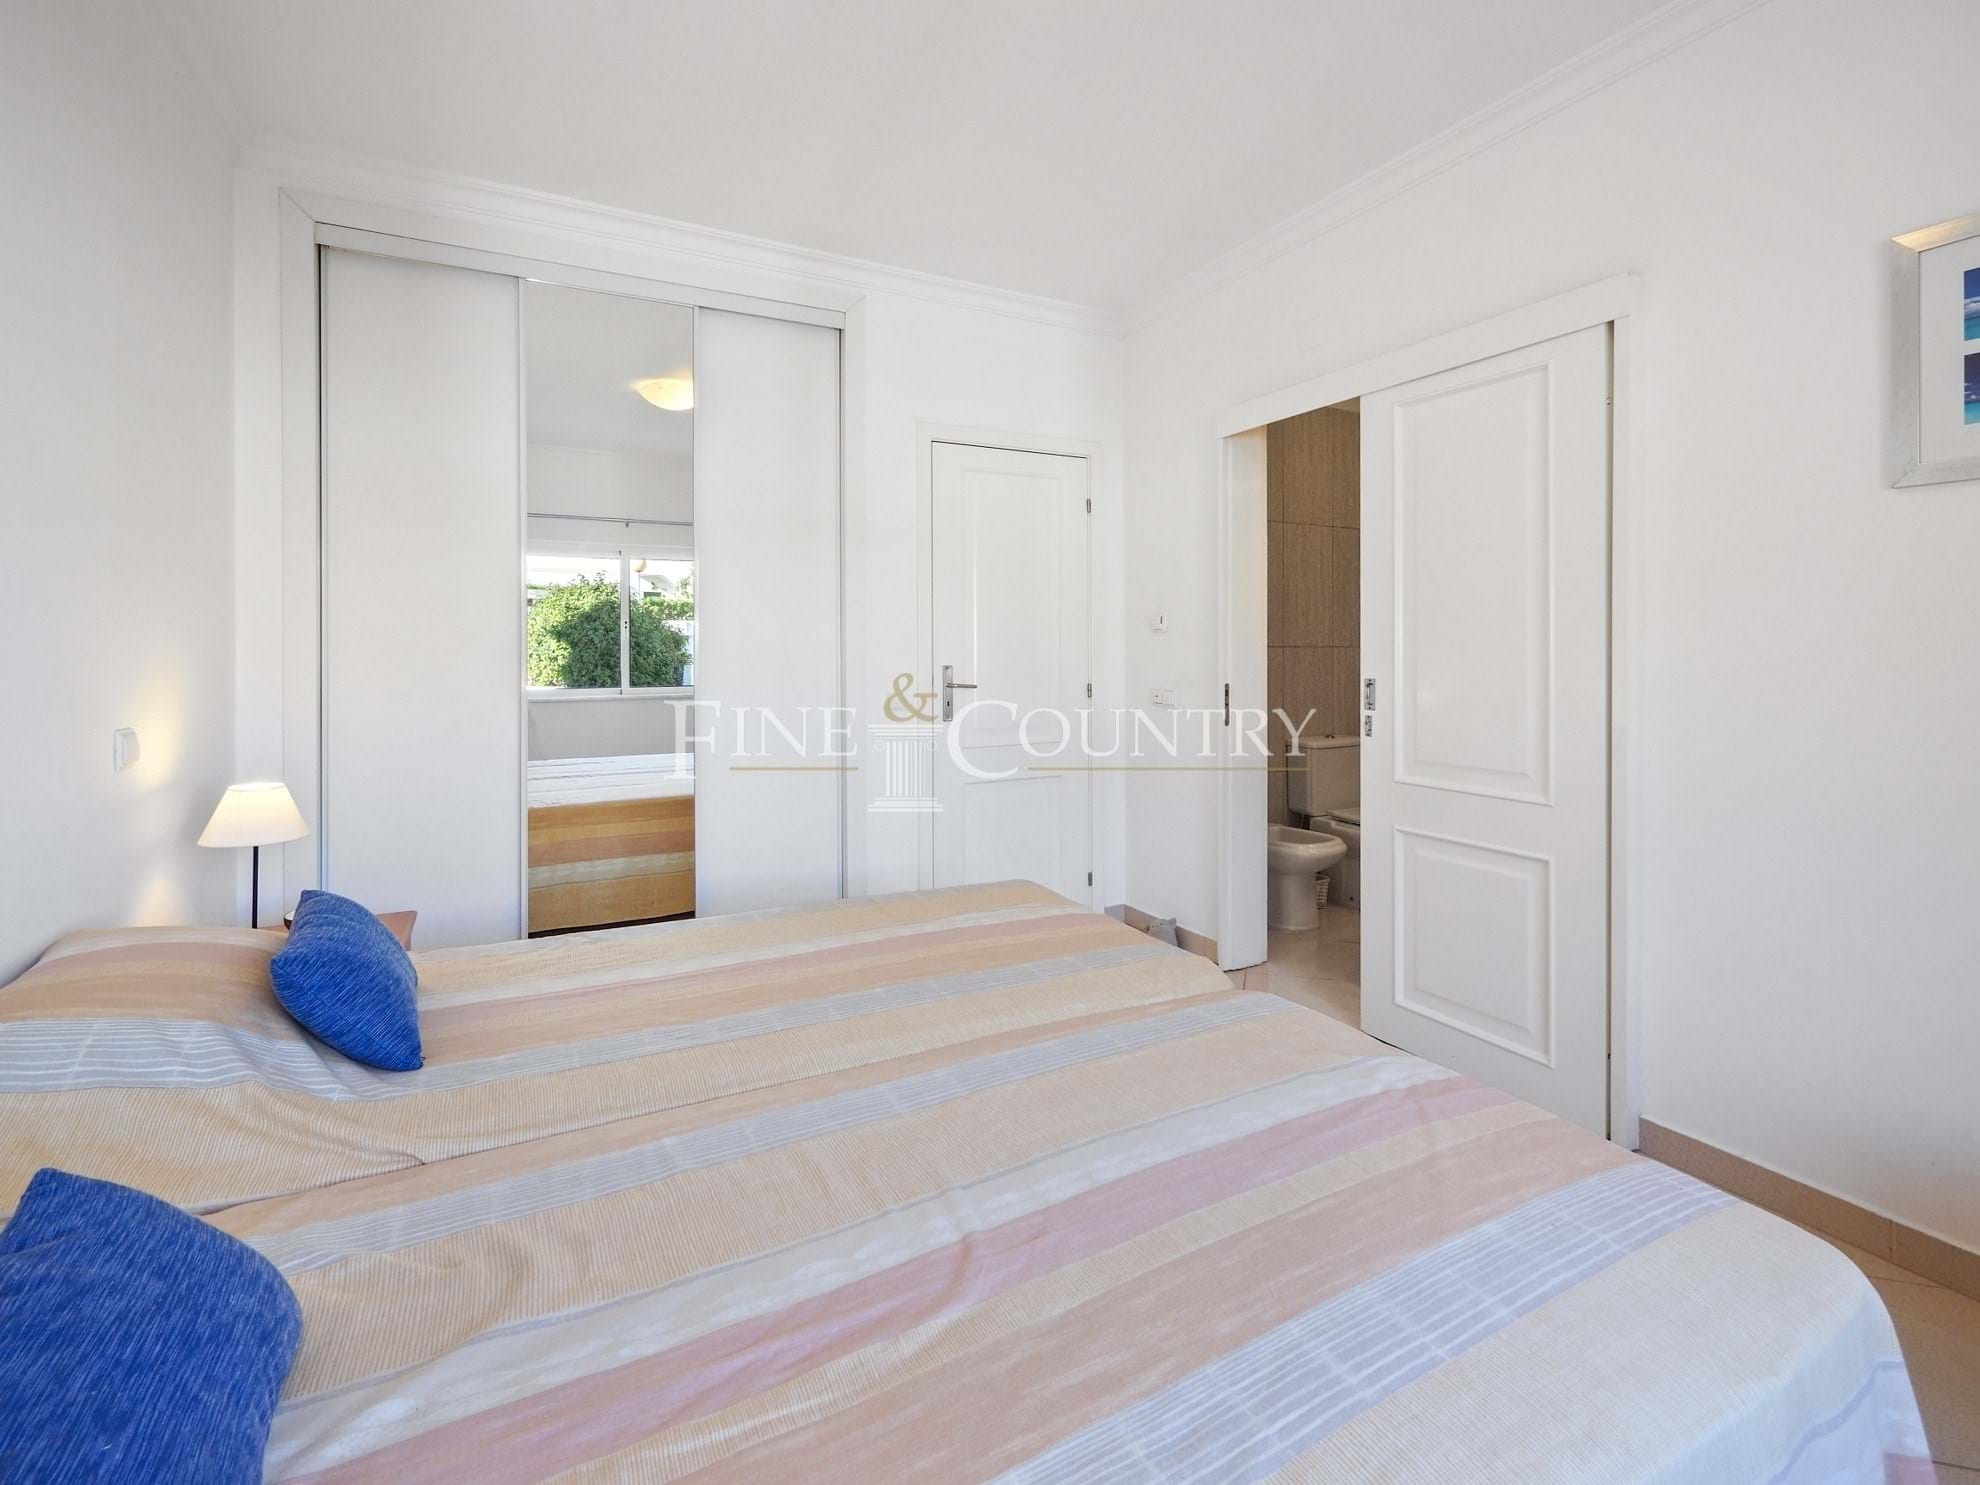 Photo of Carvoeiro - 1+1 bedroom ground floor apartment close to Carvoeiro